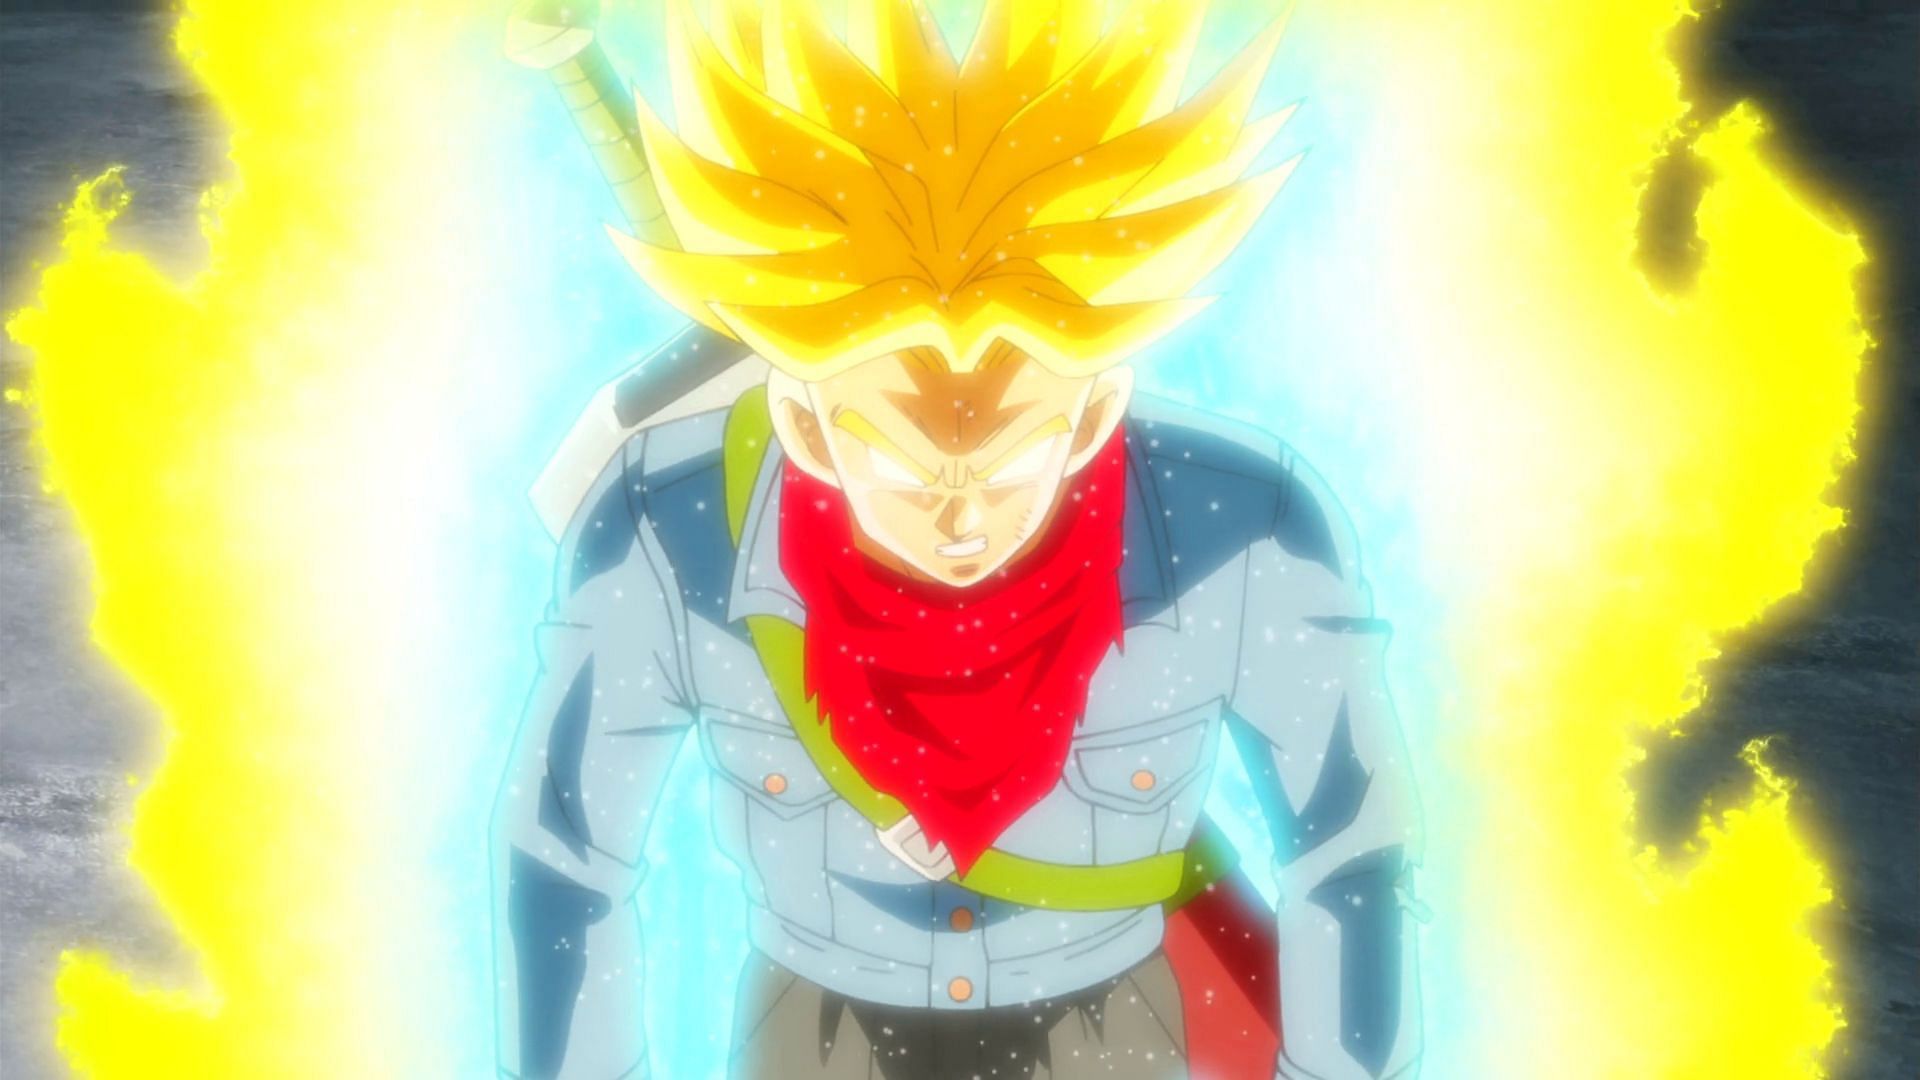 Future Trunks in his Super Saiyan Rage form in the Dragon Ball Super anime. (Image via Toei Animation)